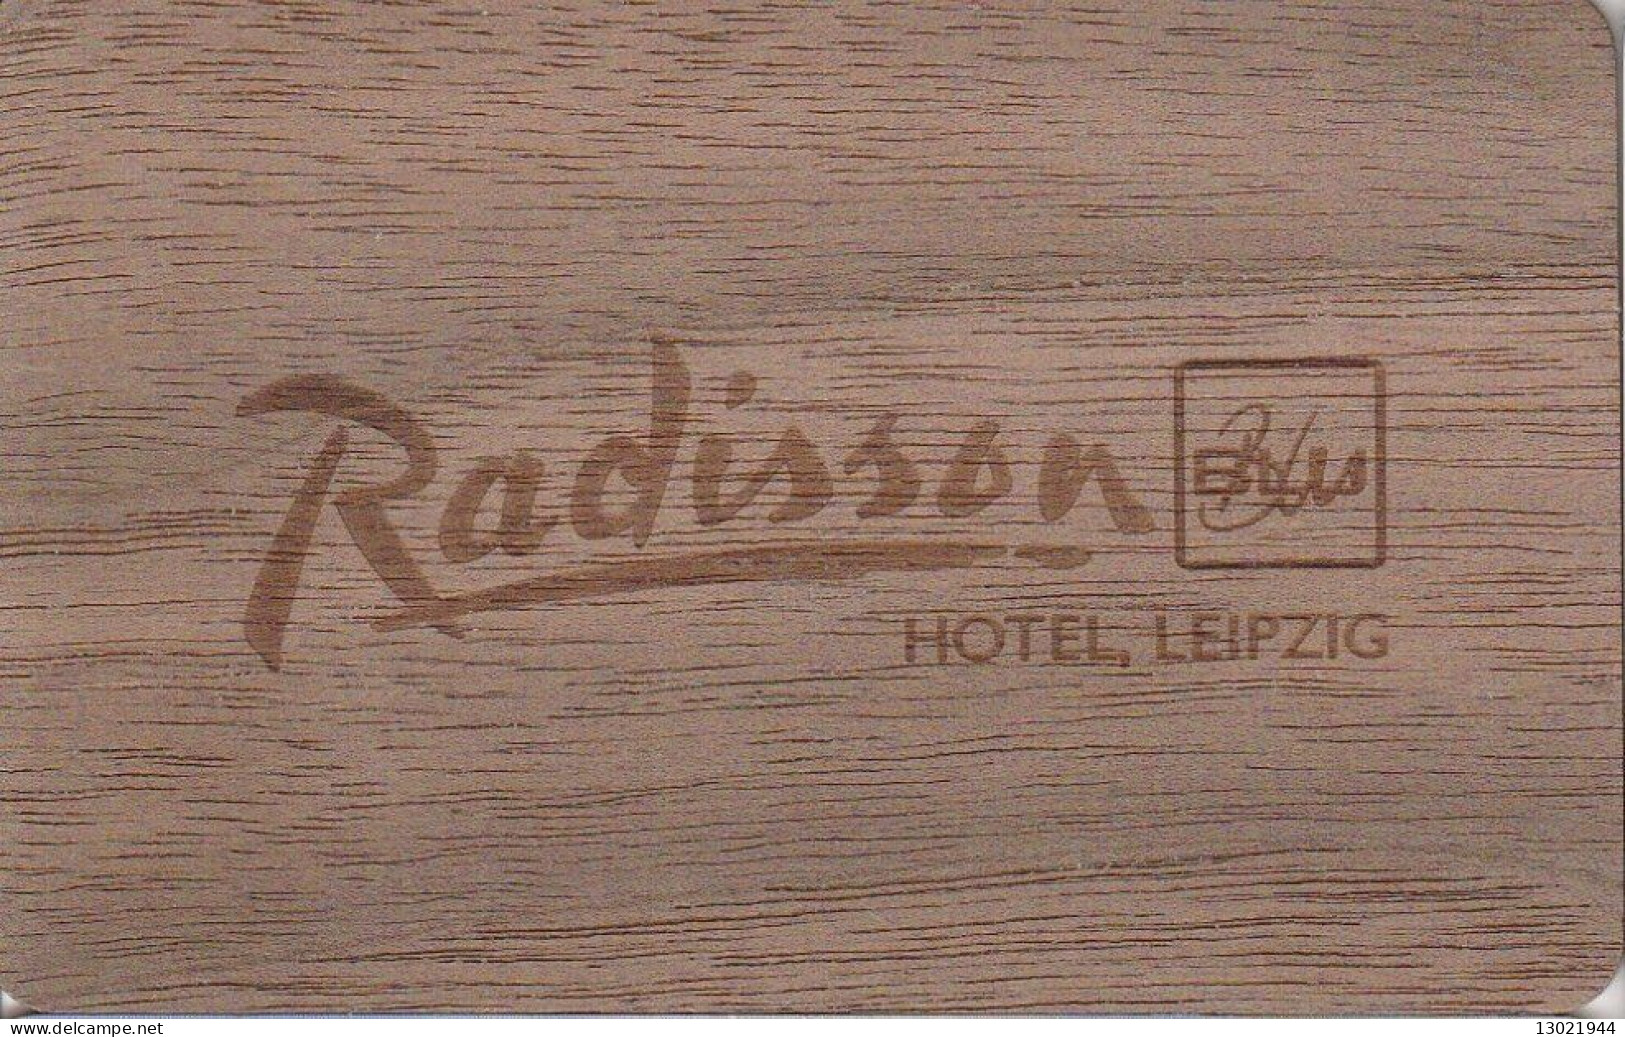 GERMANIA  KEY HOTEL  Radisson BLU Hotel Leipzig - WOODEN CARD - Hotelsleutels (kaarten)